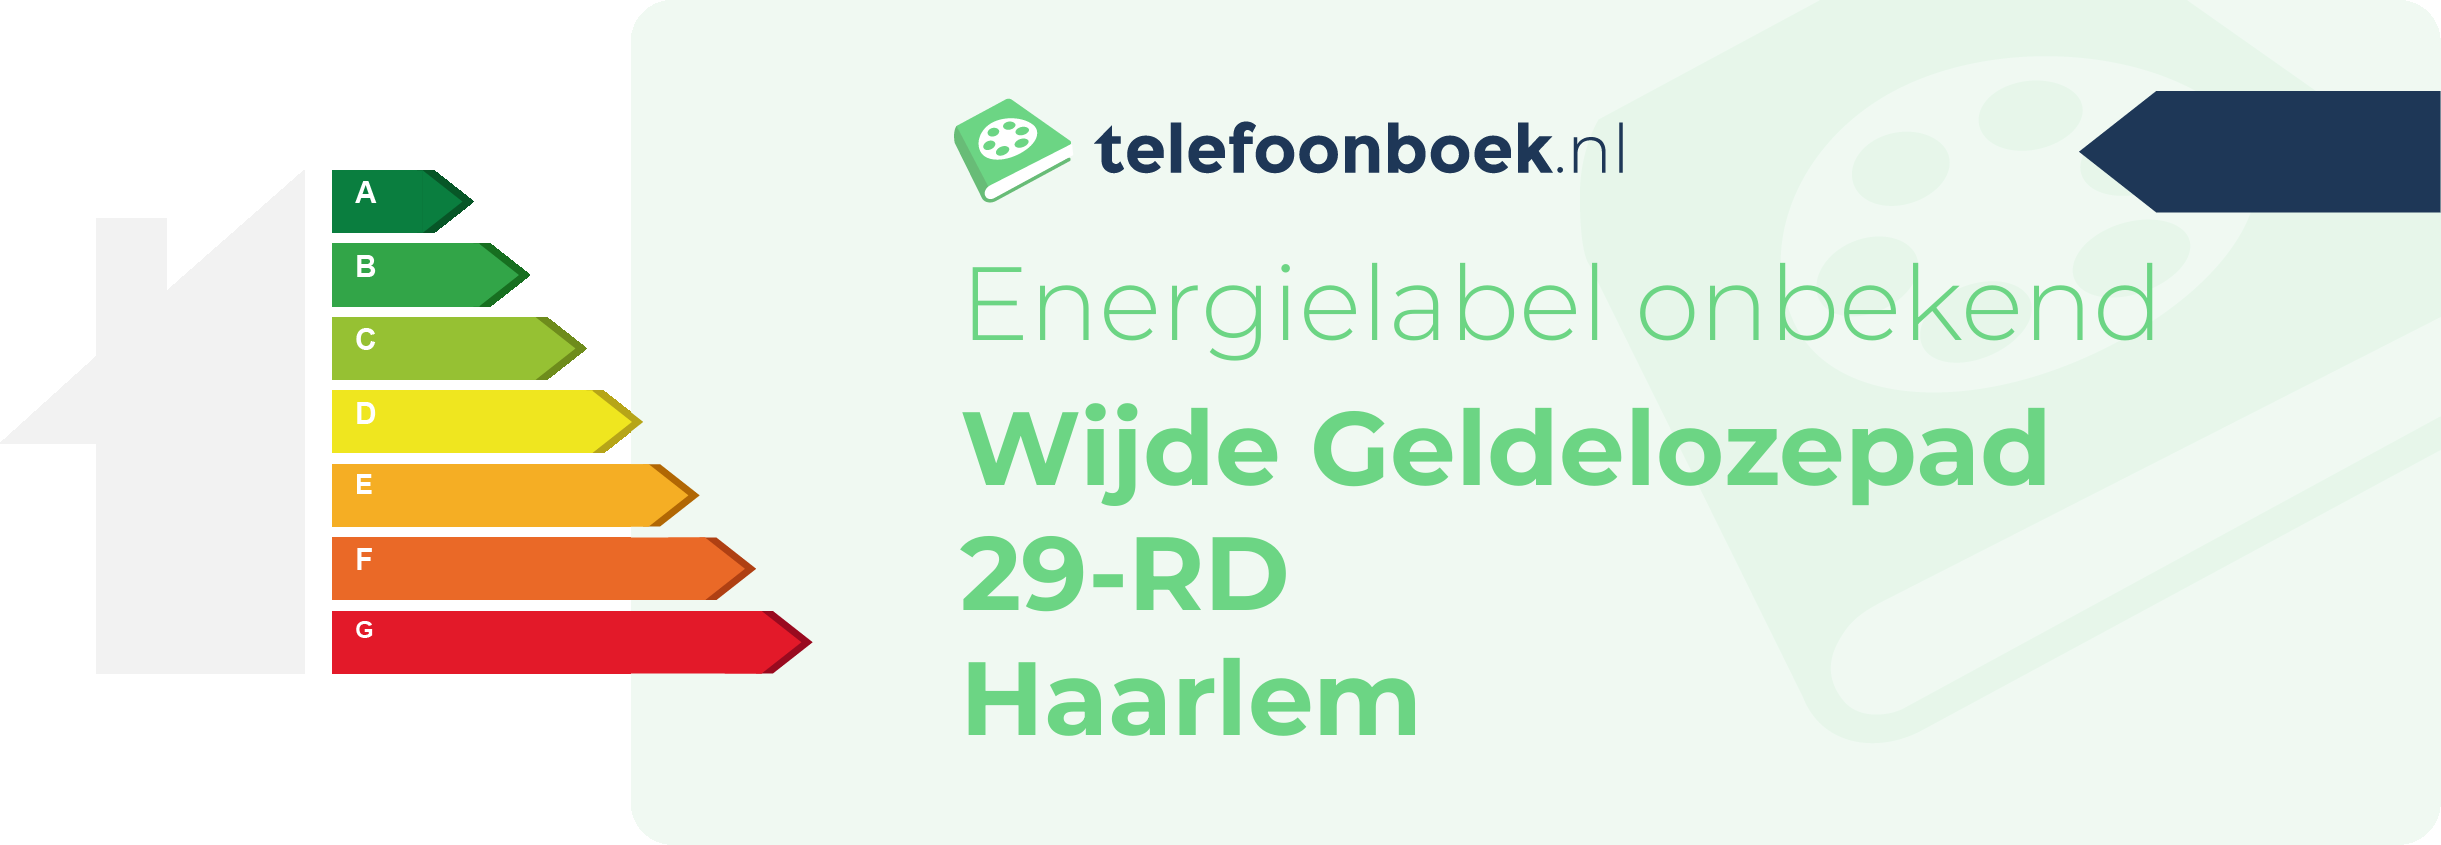 Energielabel Wijde Geldelozepad 29-RD Haarlem